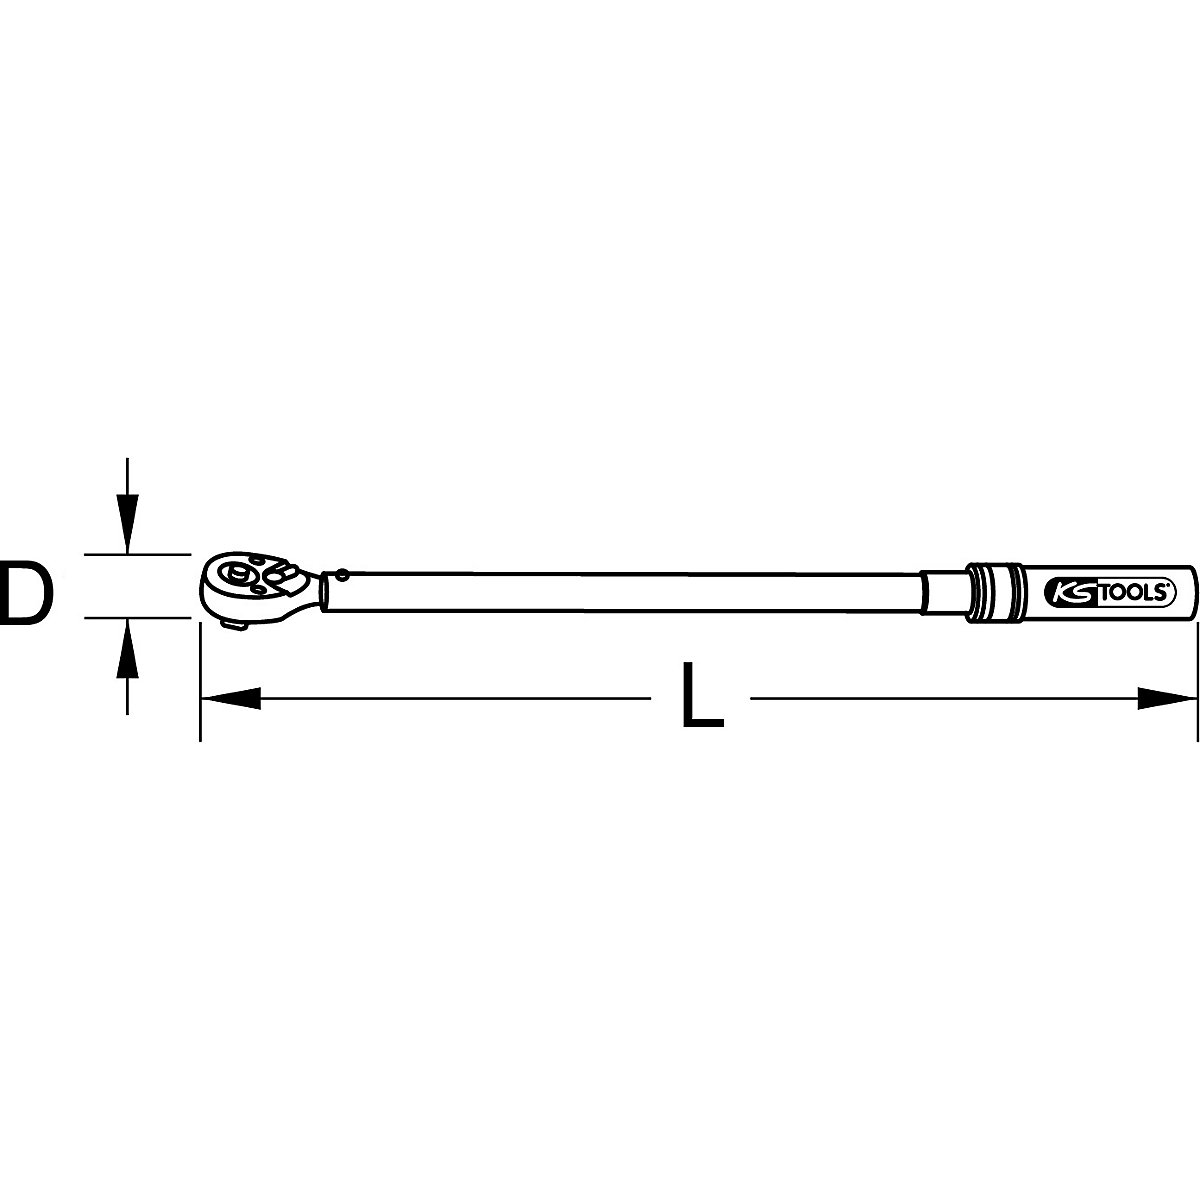 Llave dinamométrica industrial, reversible – KS Tools (Imagen del producto 9)-8